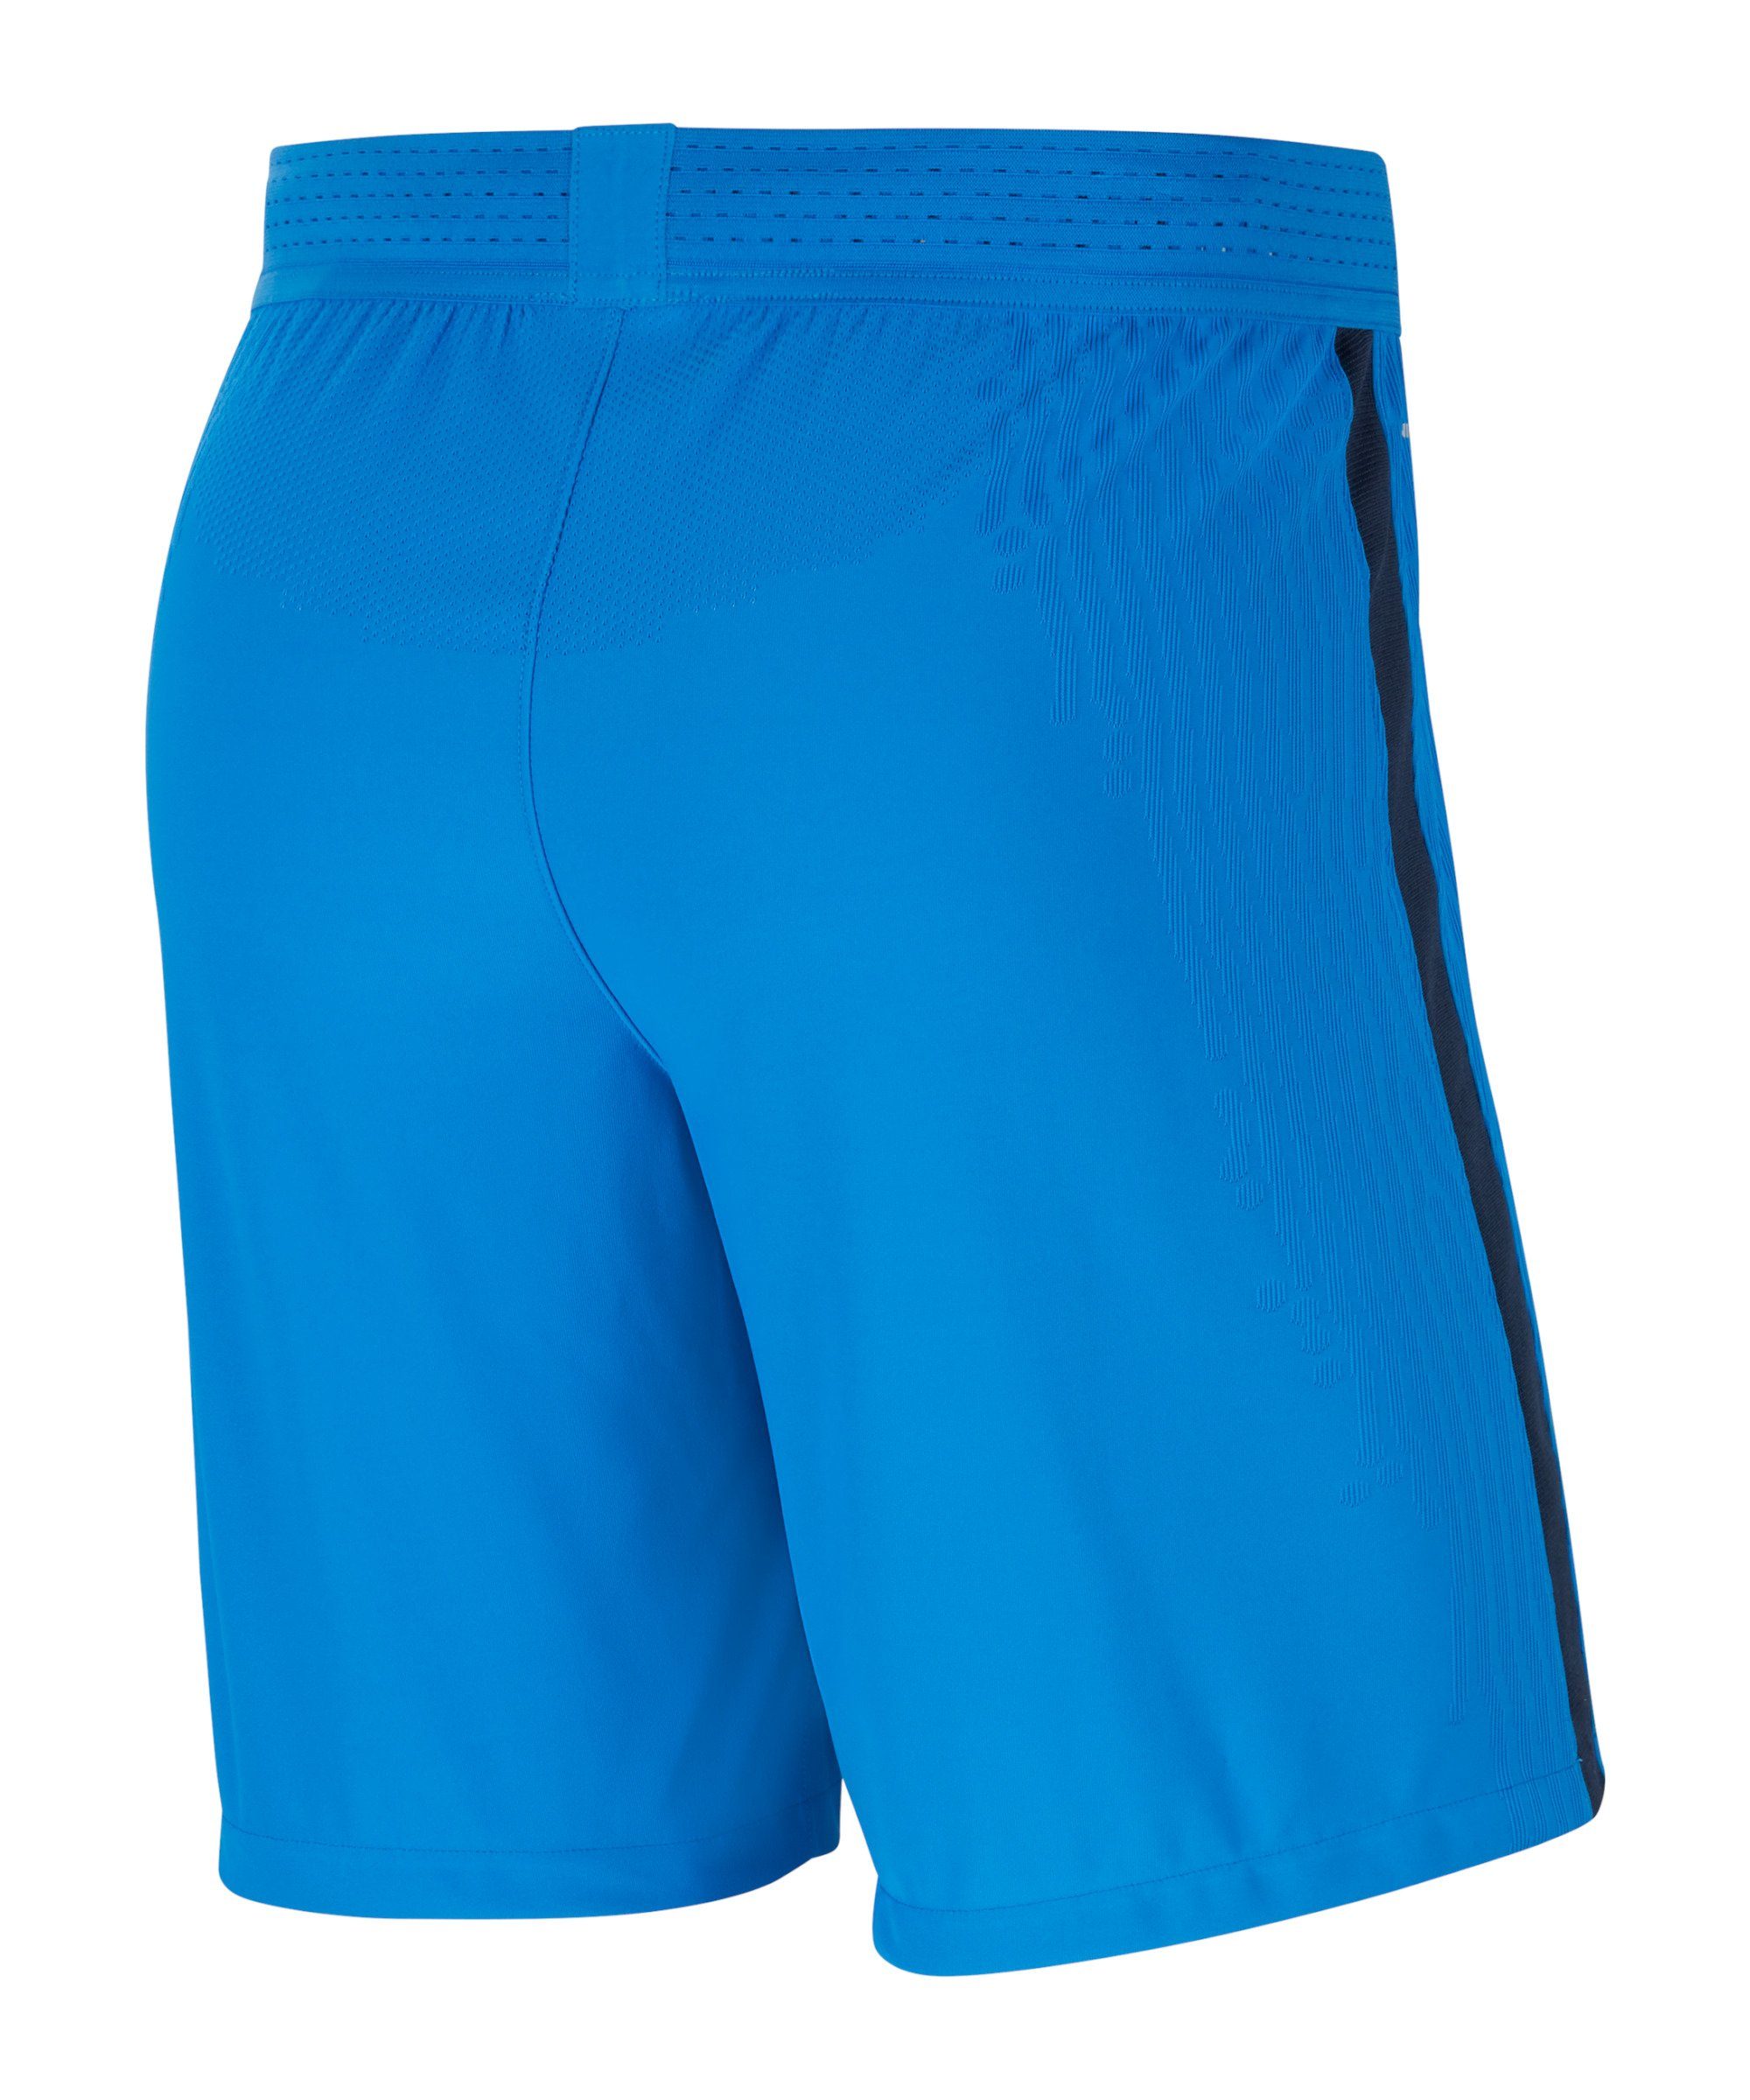 Knit Sporthose Vapor blauweiss Nike Short III